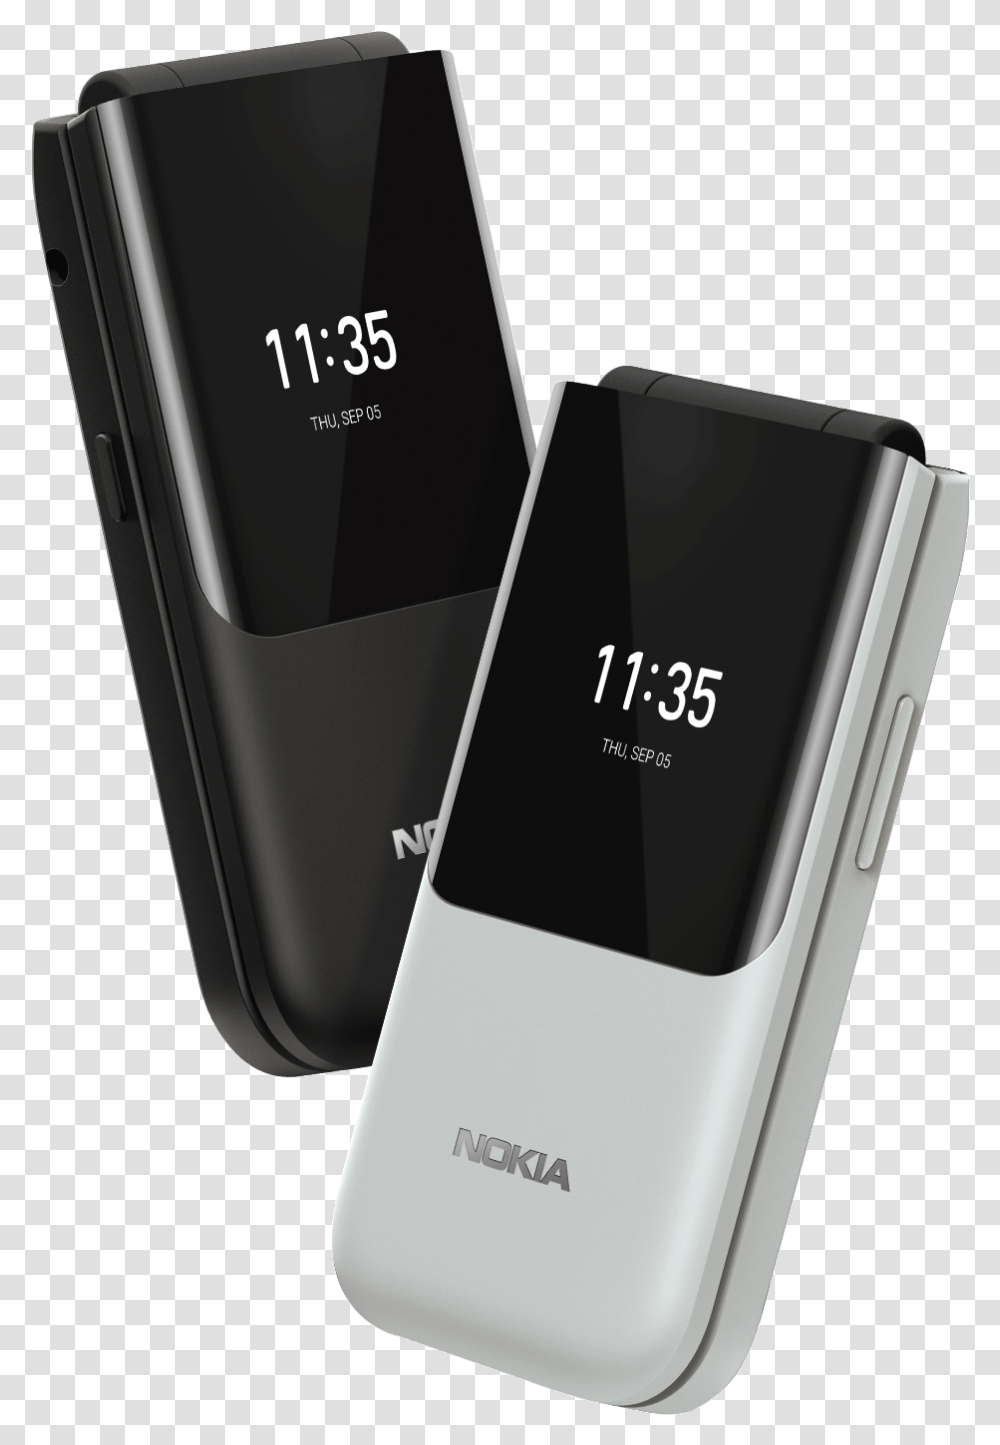 Nokia 2720 Flip Nokia 2720 Flip, Phone, Electronics, Mobile Phone, Cell Phone Transparent Png